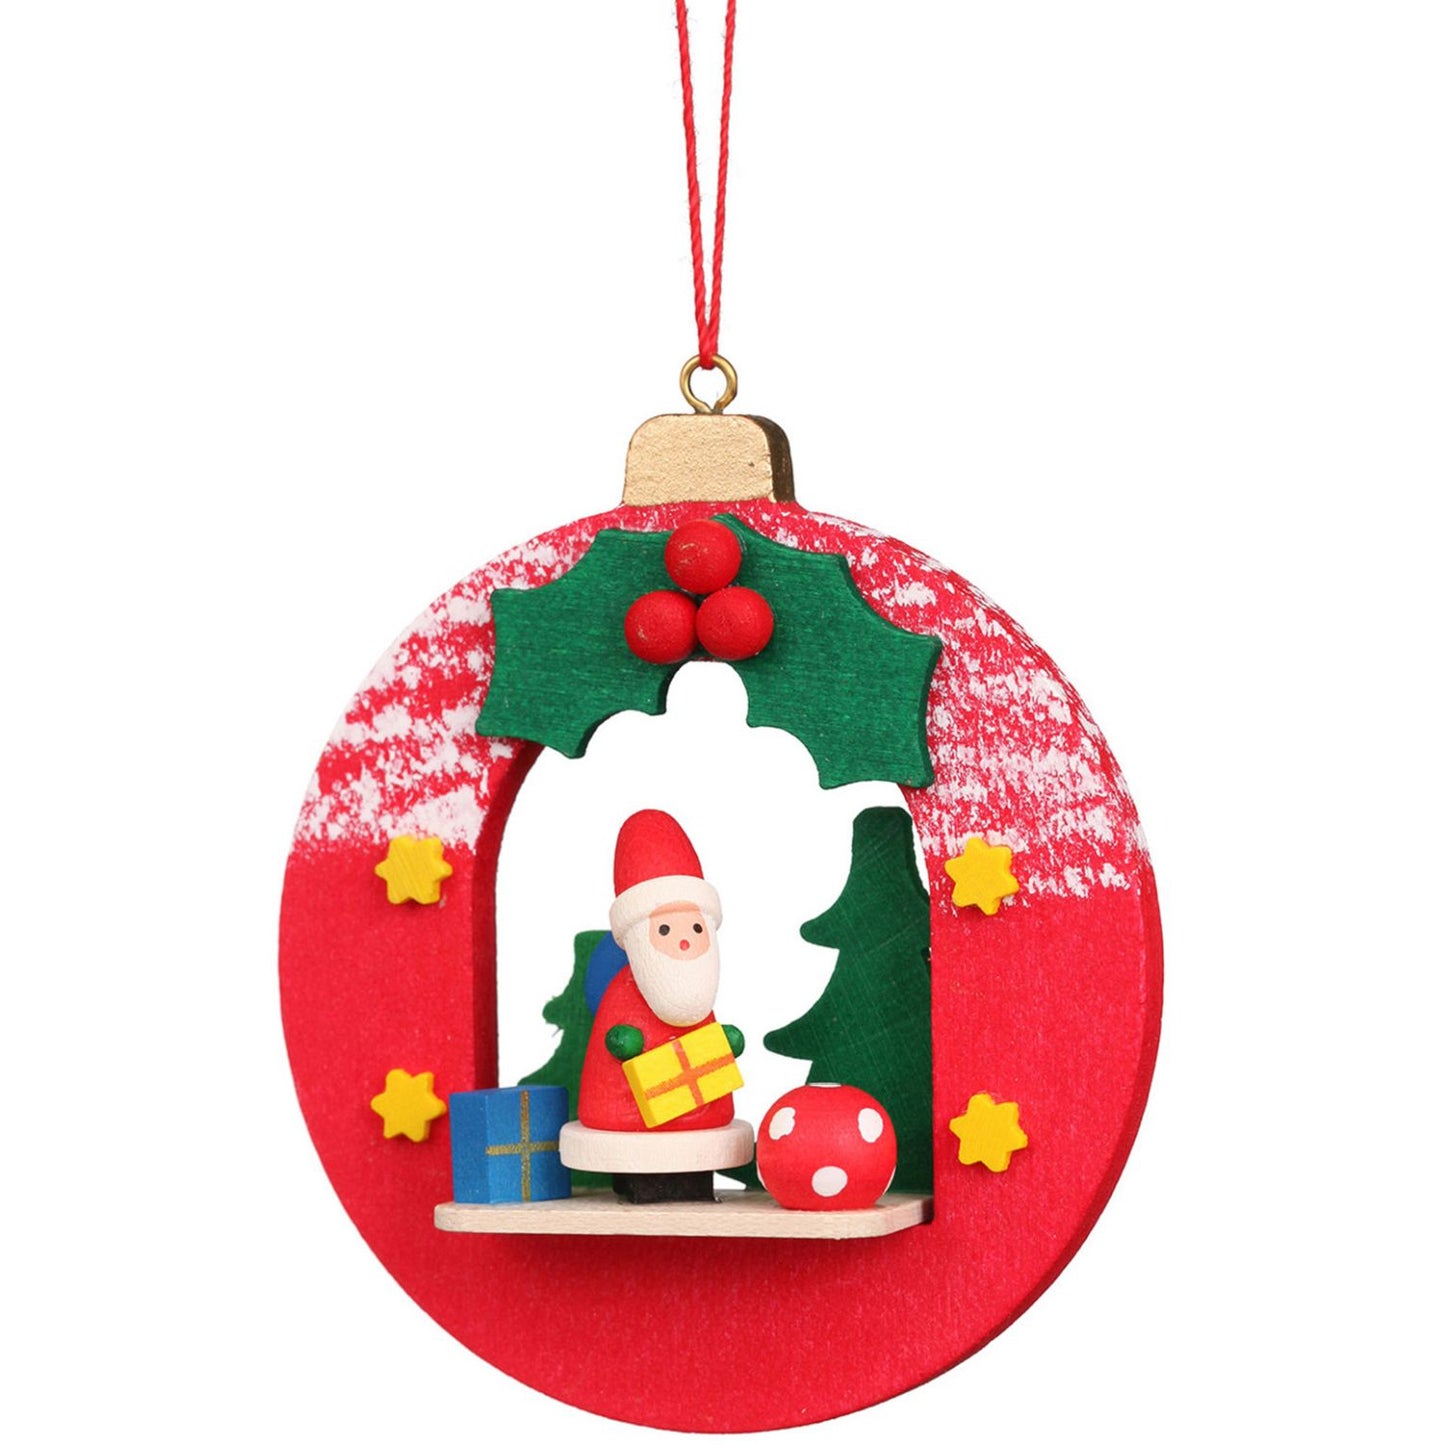 Alexander Taron Christian Ulbricht Ornament - Ball with Santa